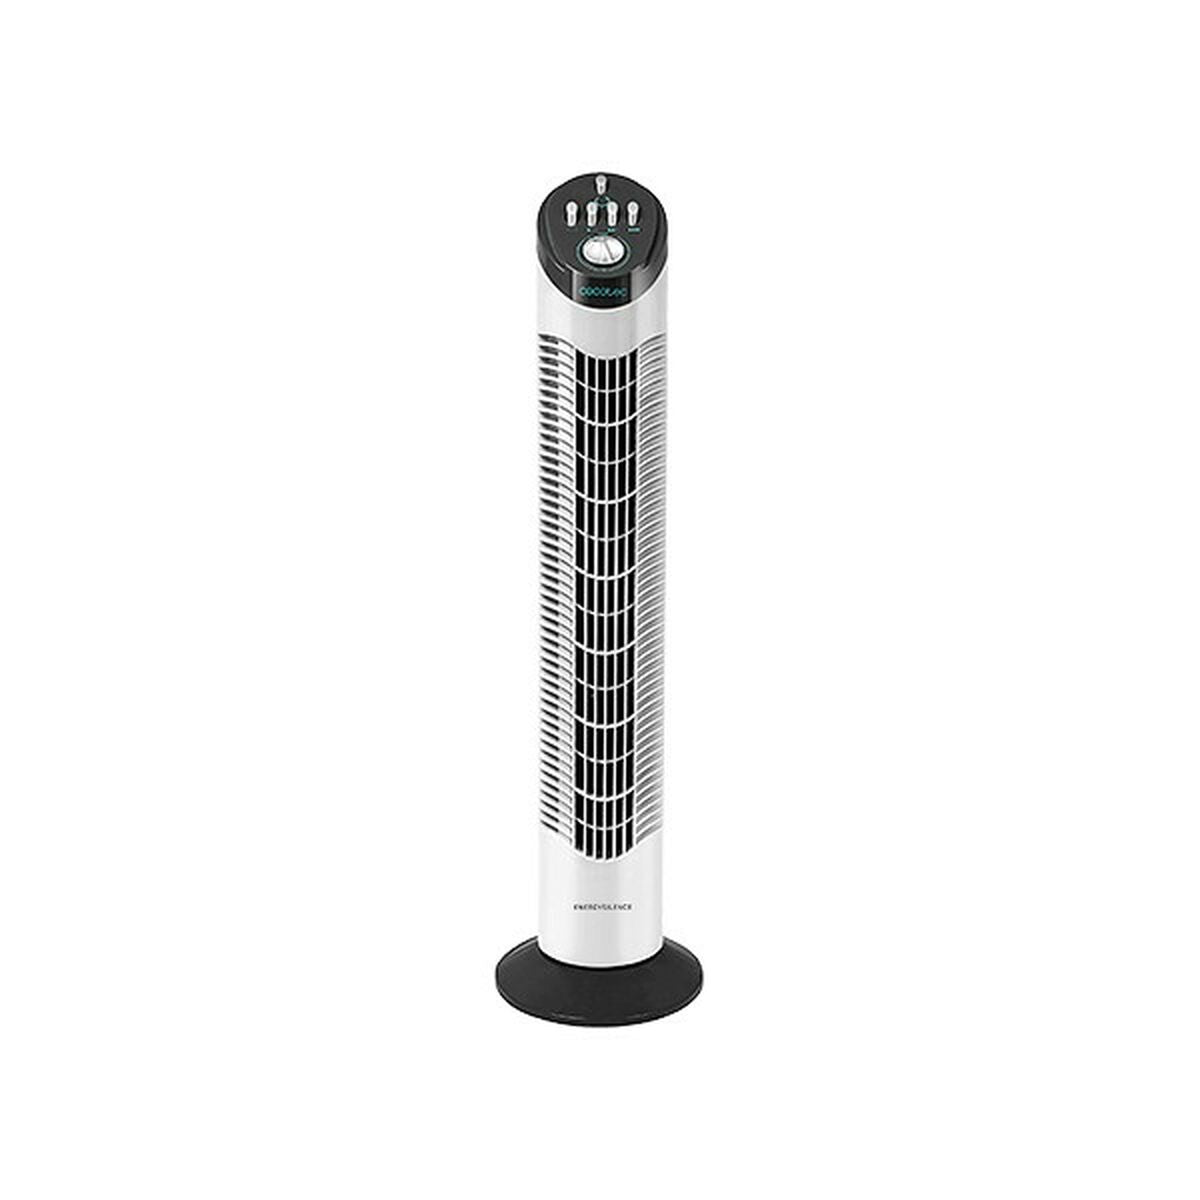 Kaufe Turmventilator Cecotec EnergySilence 790 Skyline bei AWK Flagship um € 56.00